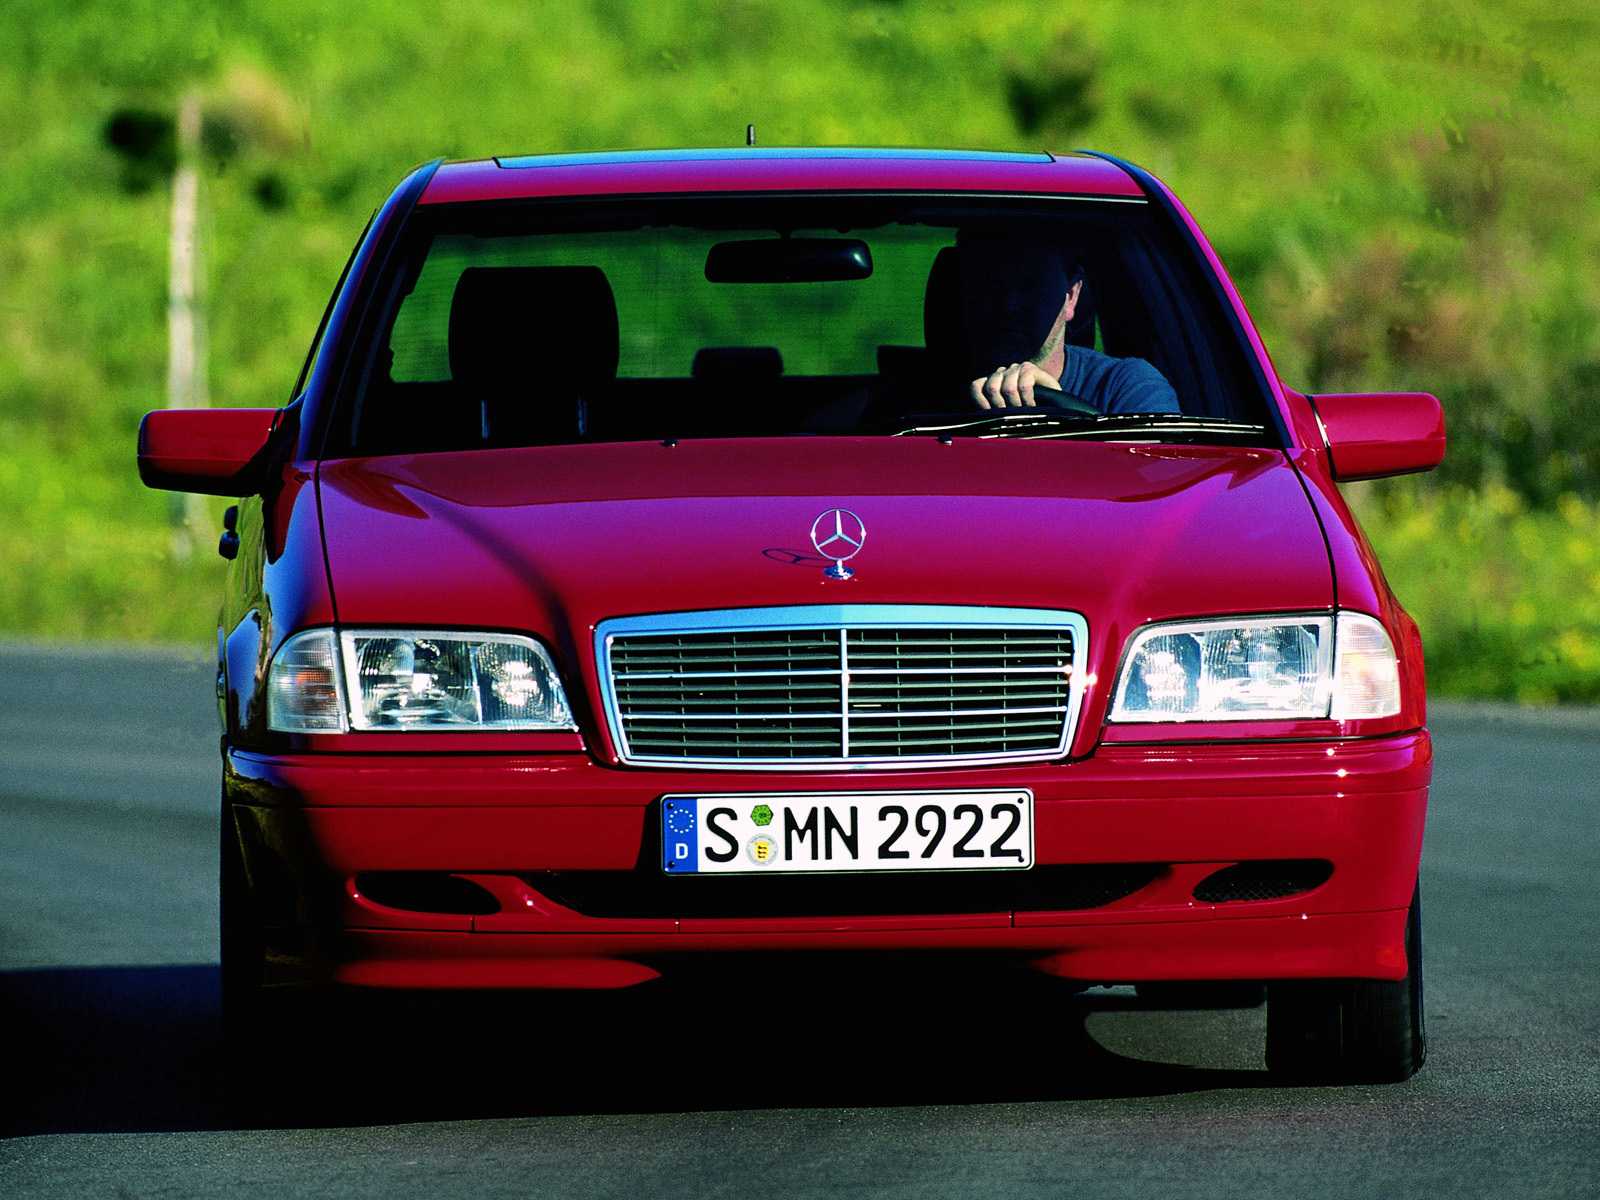 Mercedes benz c-klasse (w204) 2007 - 2011 технические характеристики, поколения, история